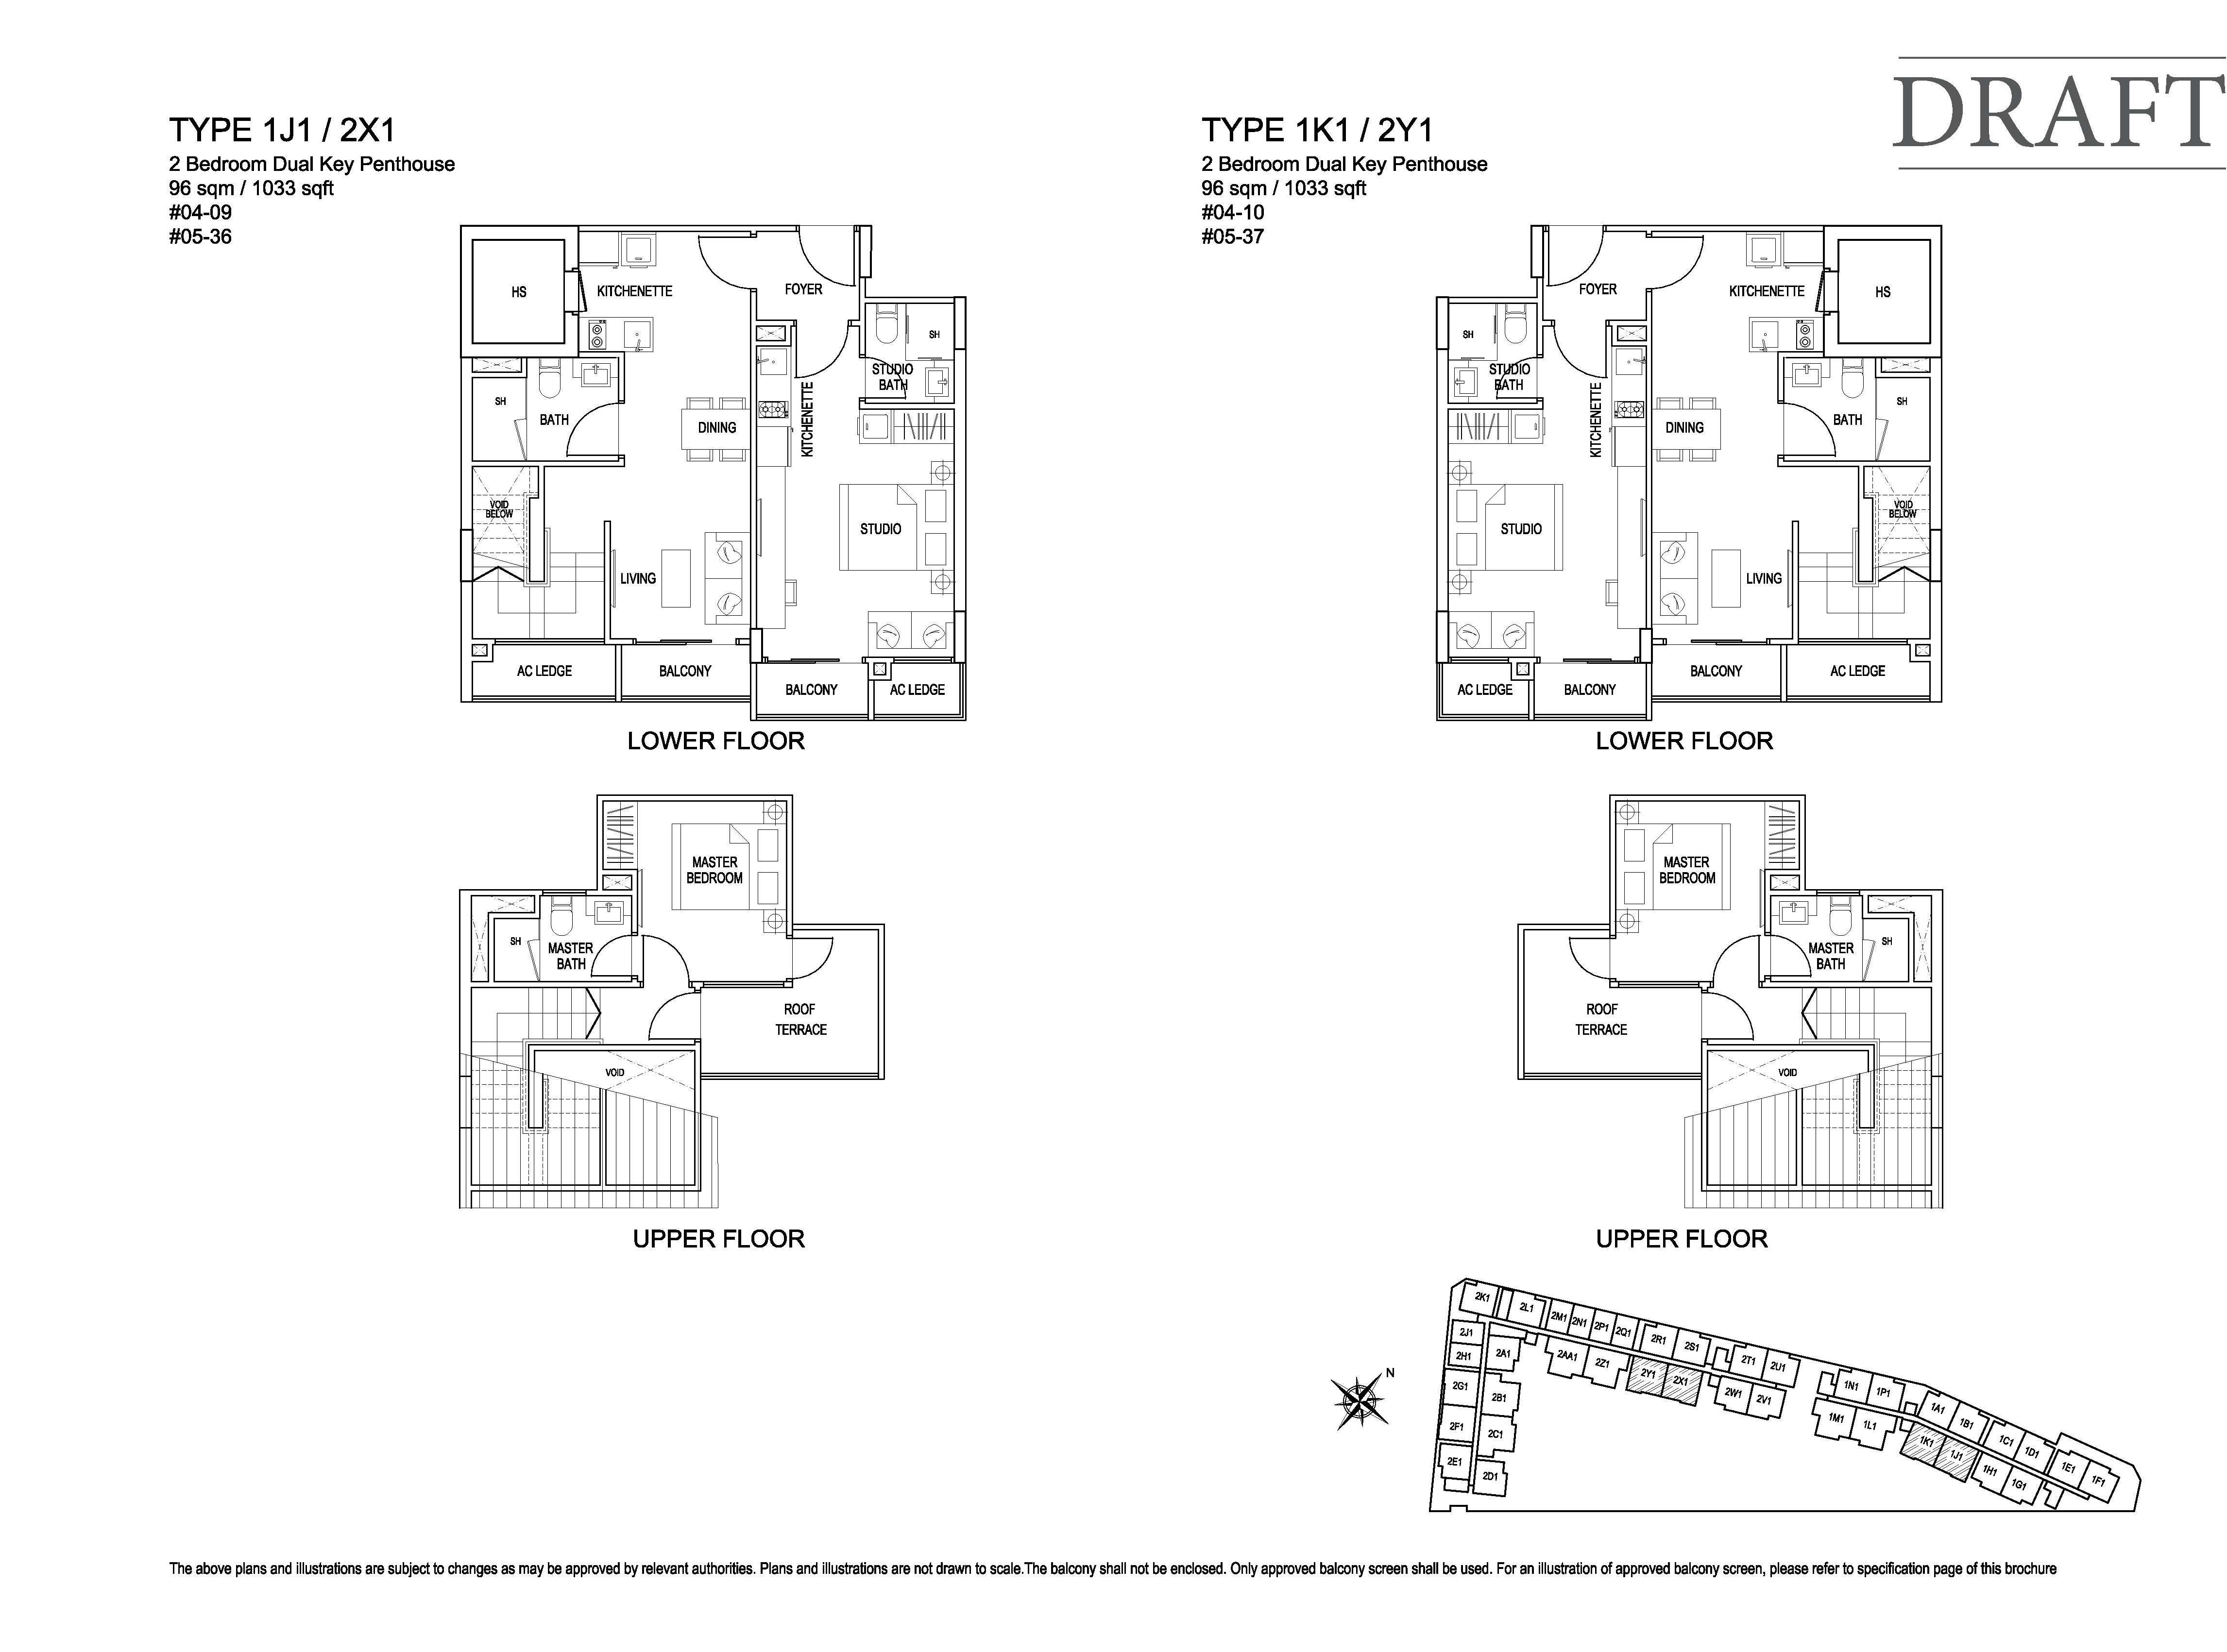 Kensington Square 2 Bedroom Dual Key Penthouse Floor Plans Type 1J1, 2X1, 1K1, 2Y1